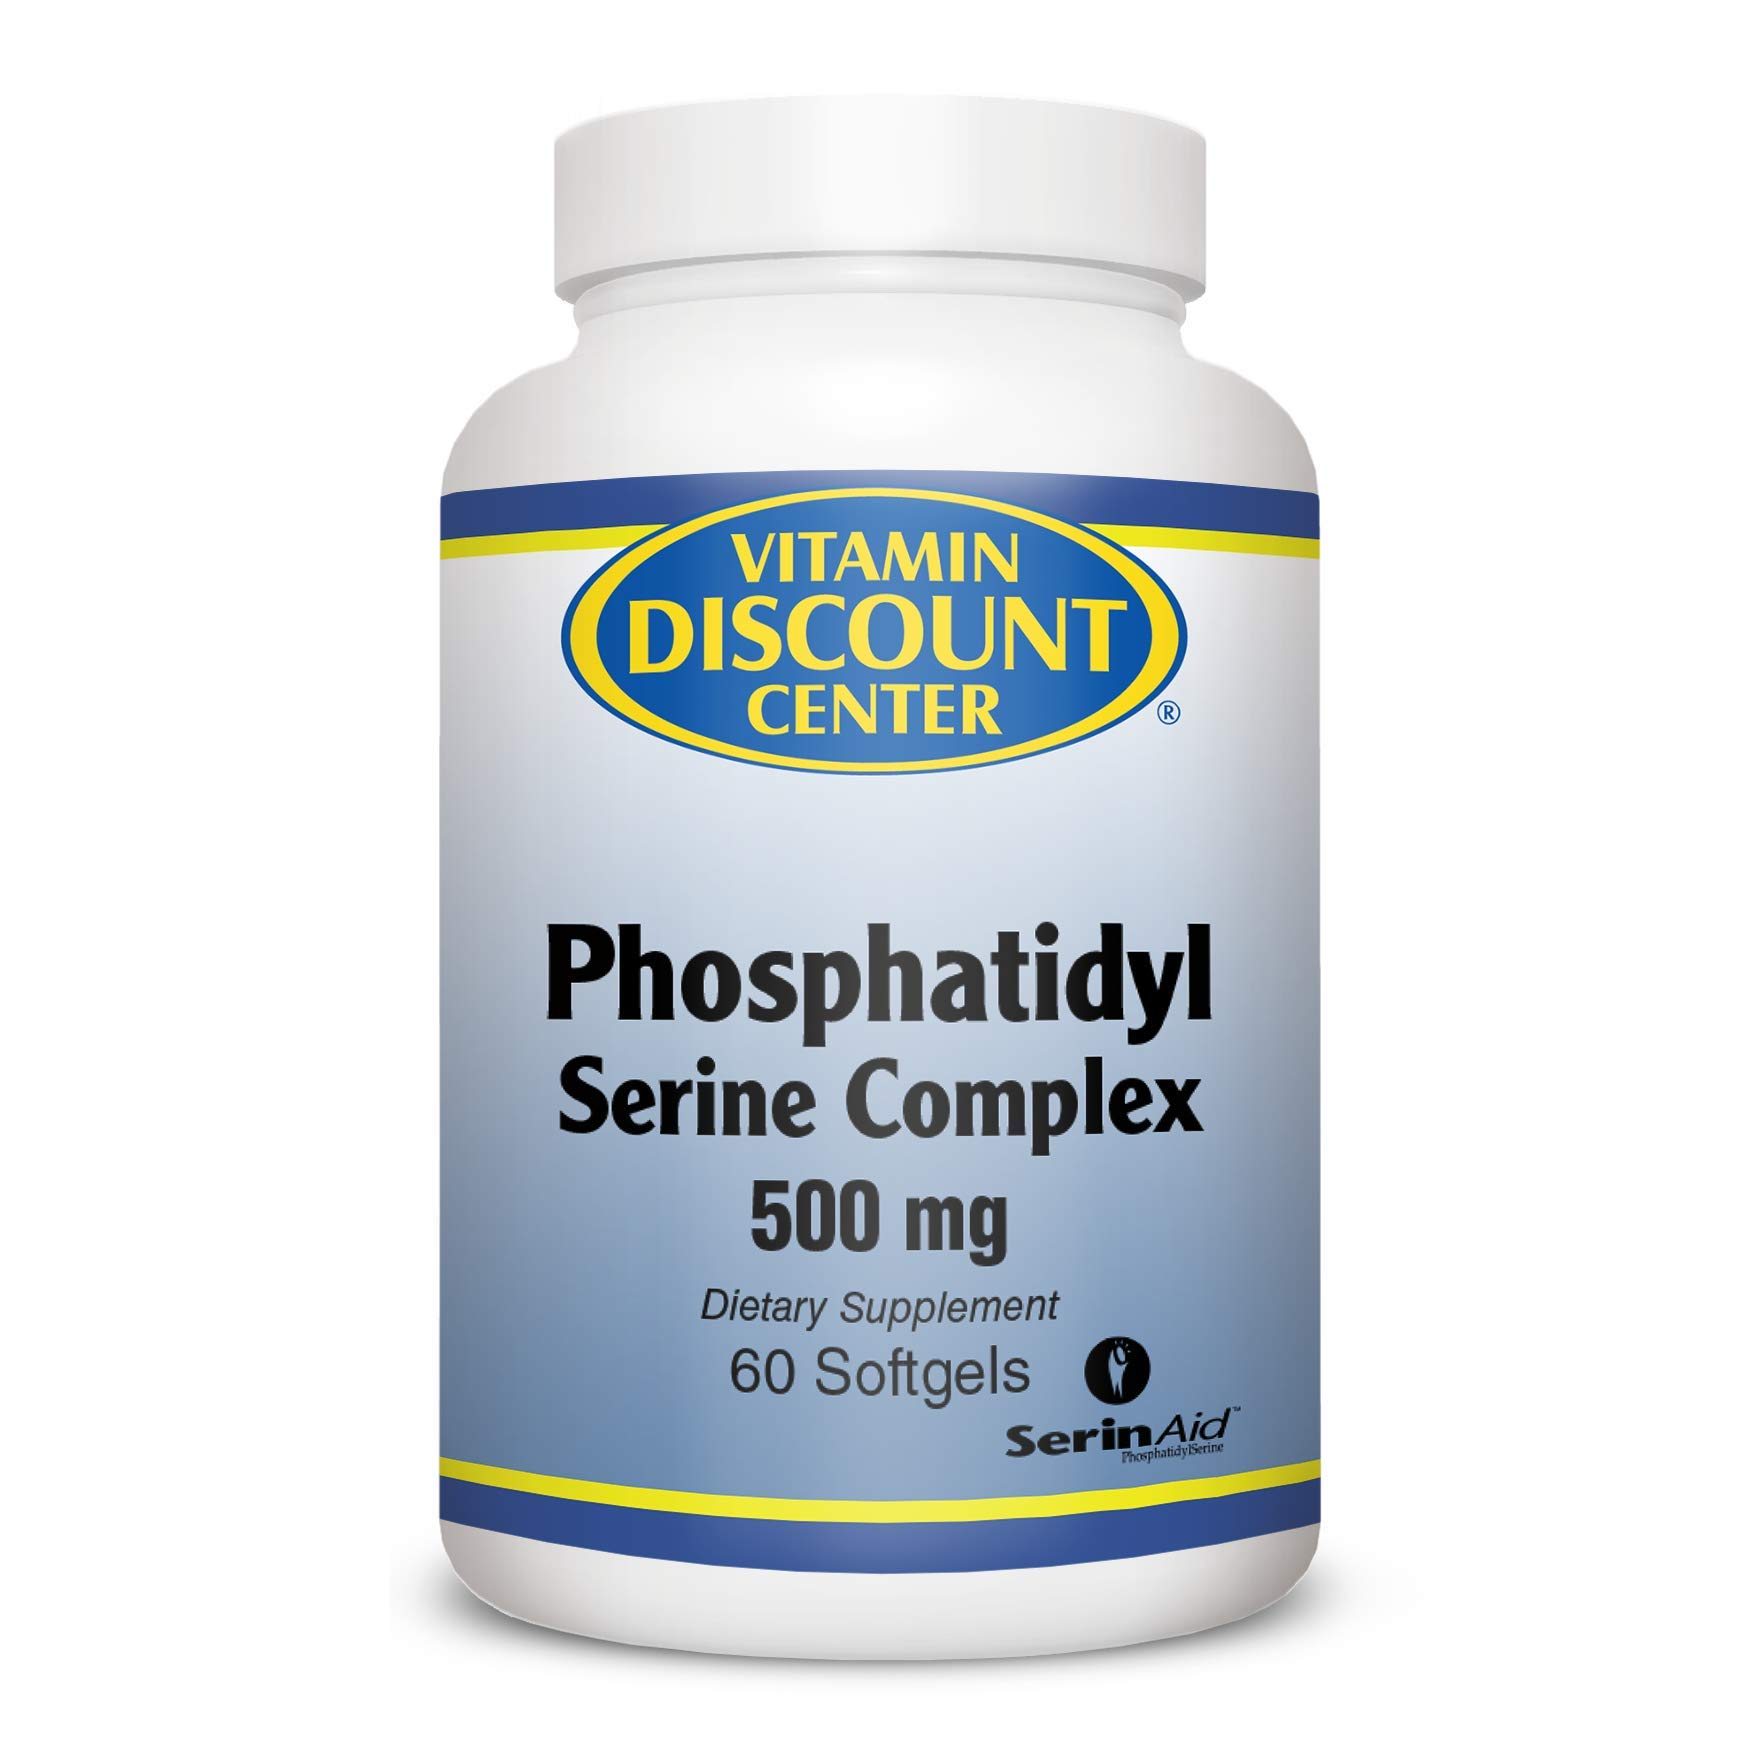 Vitamin Discount Center, Phosphatidyl Serine Complex 500 mg, 60 Softgels (2 Pack)